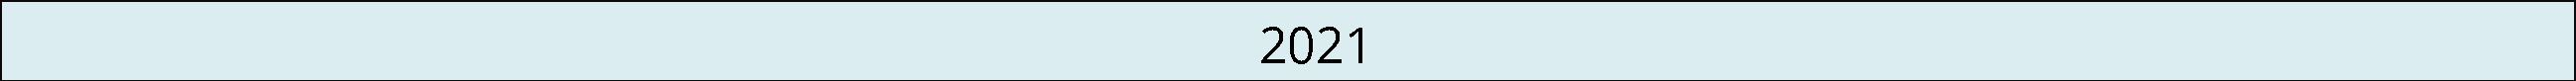 2021. Figur